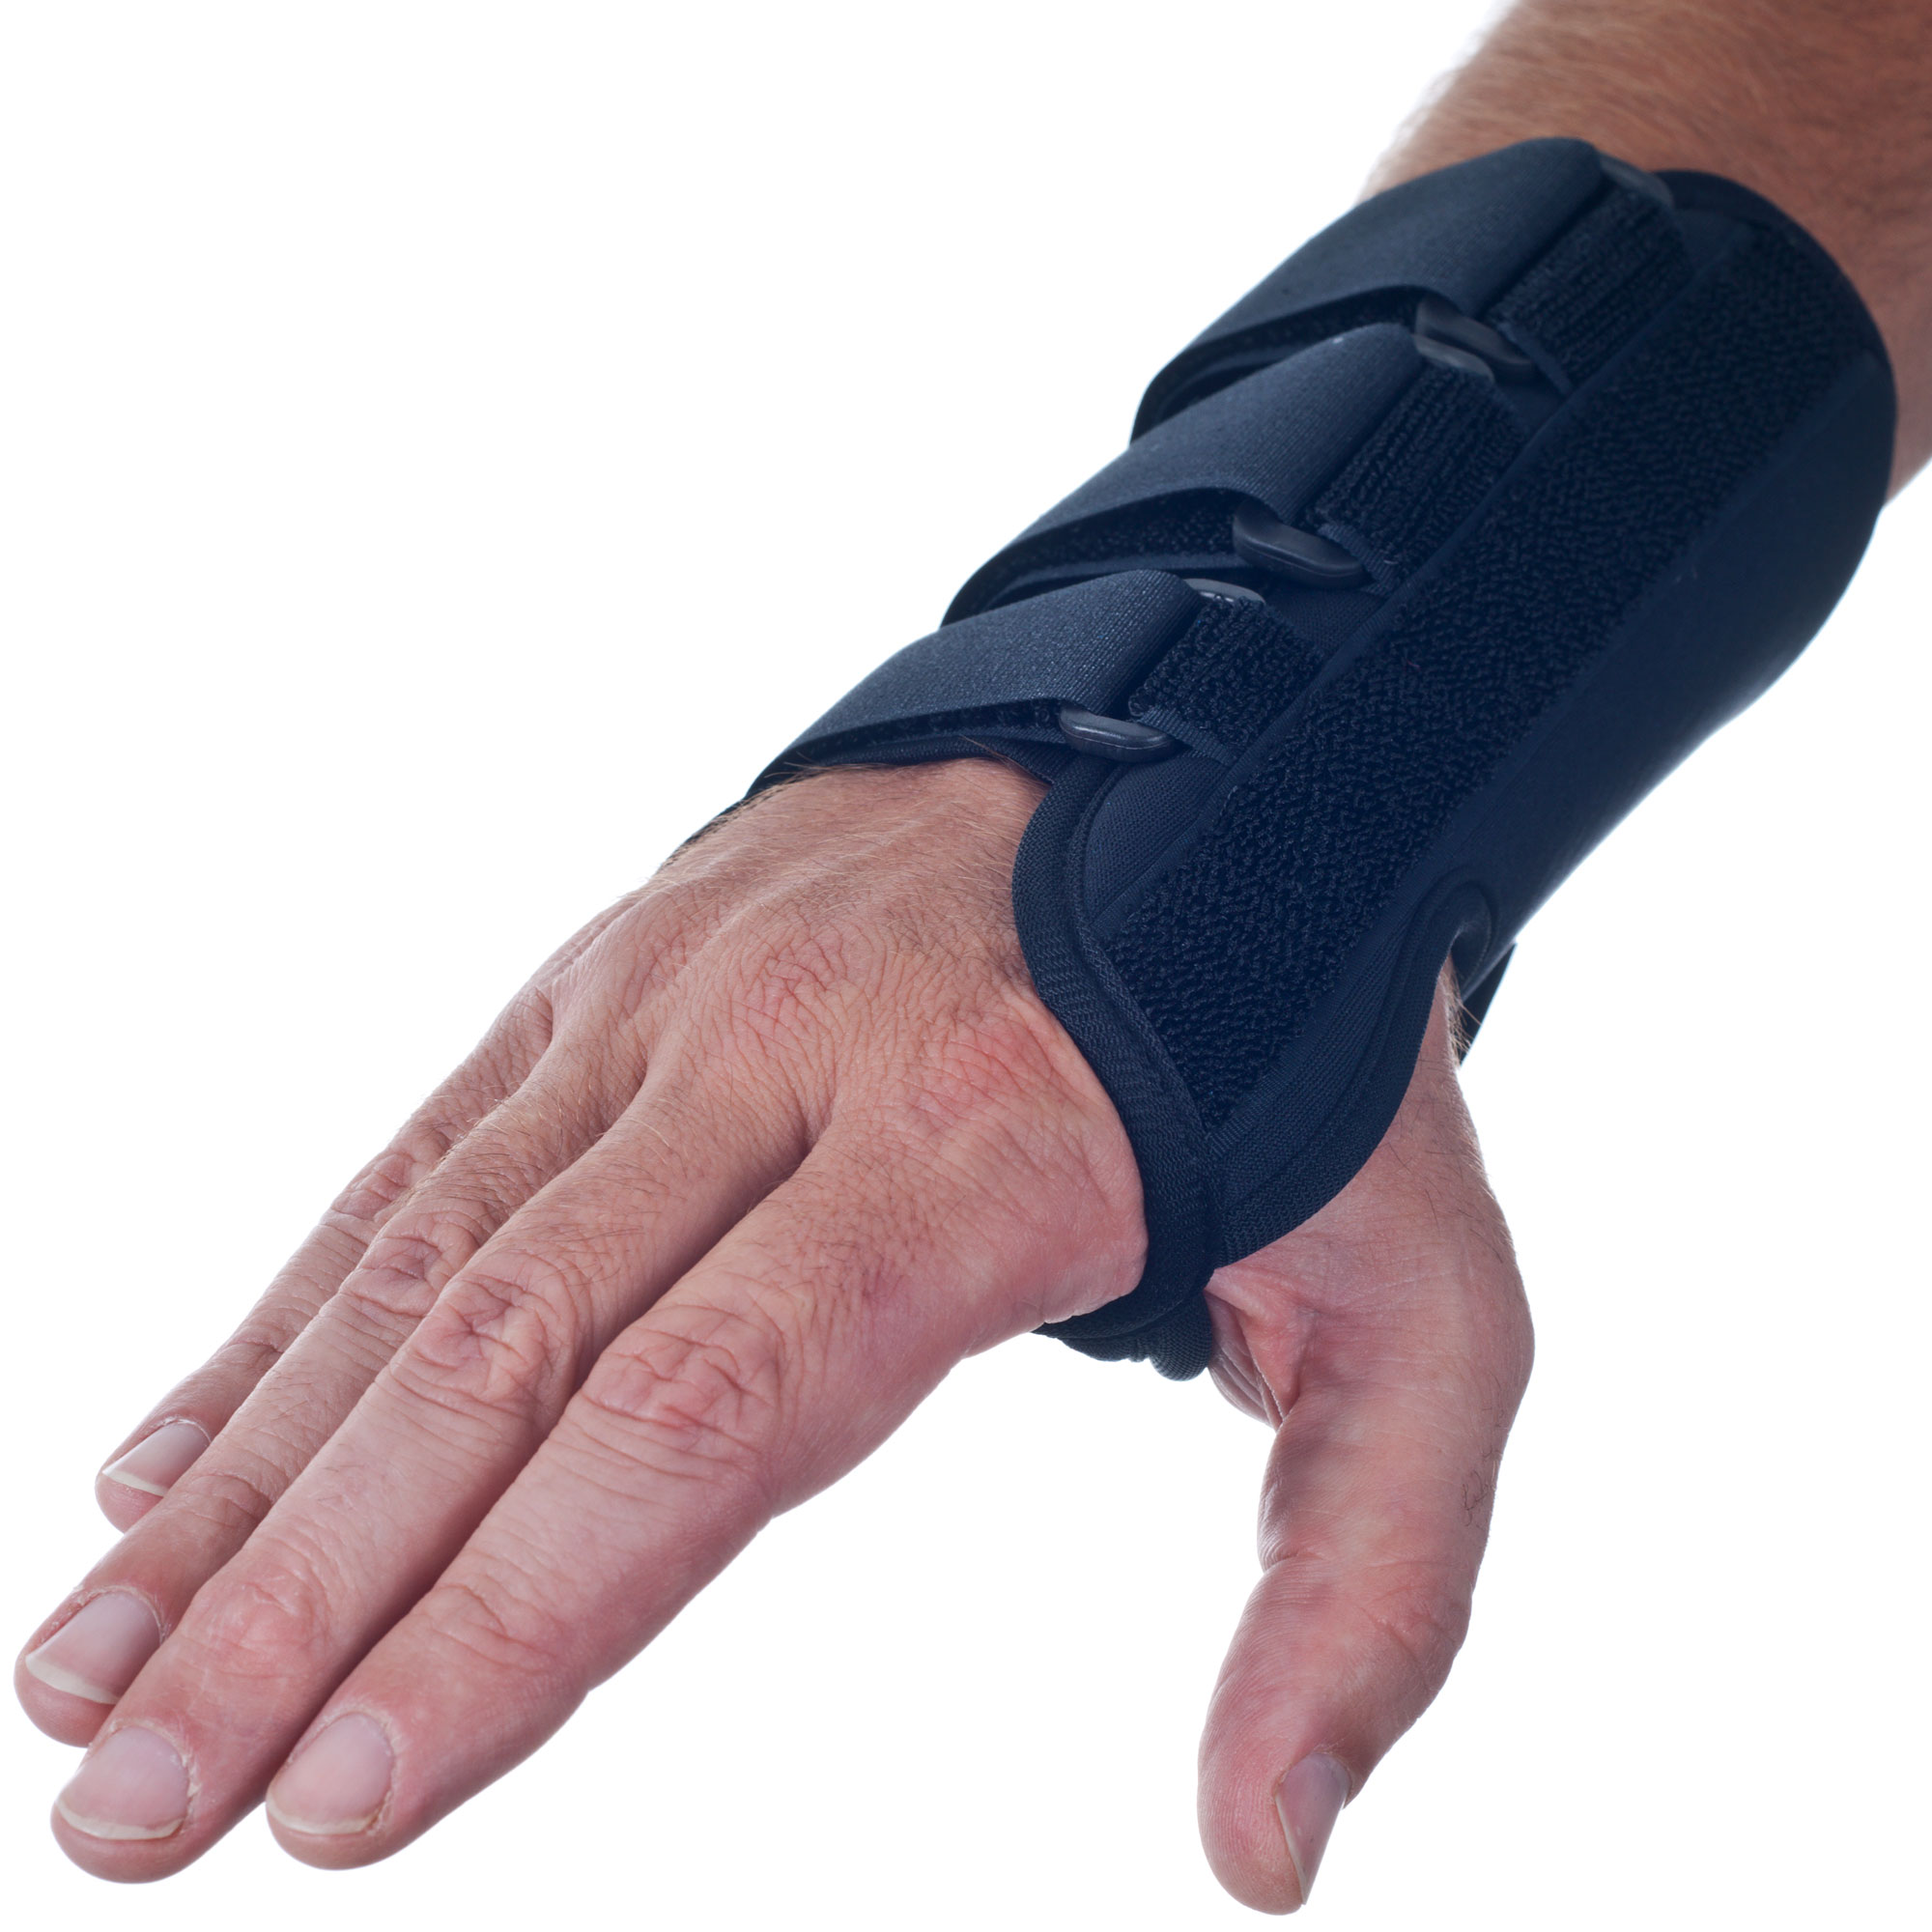 Remedy Breathable Neoprene Wrist Brace - Medium Left